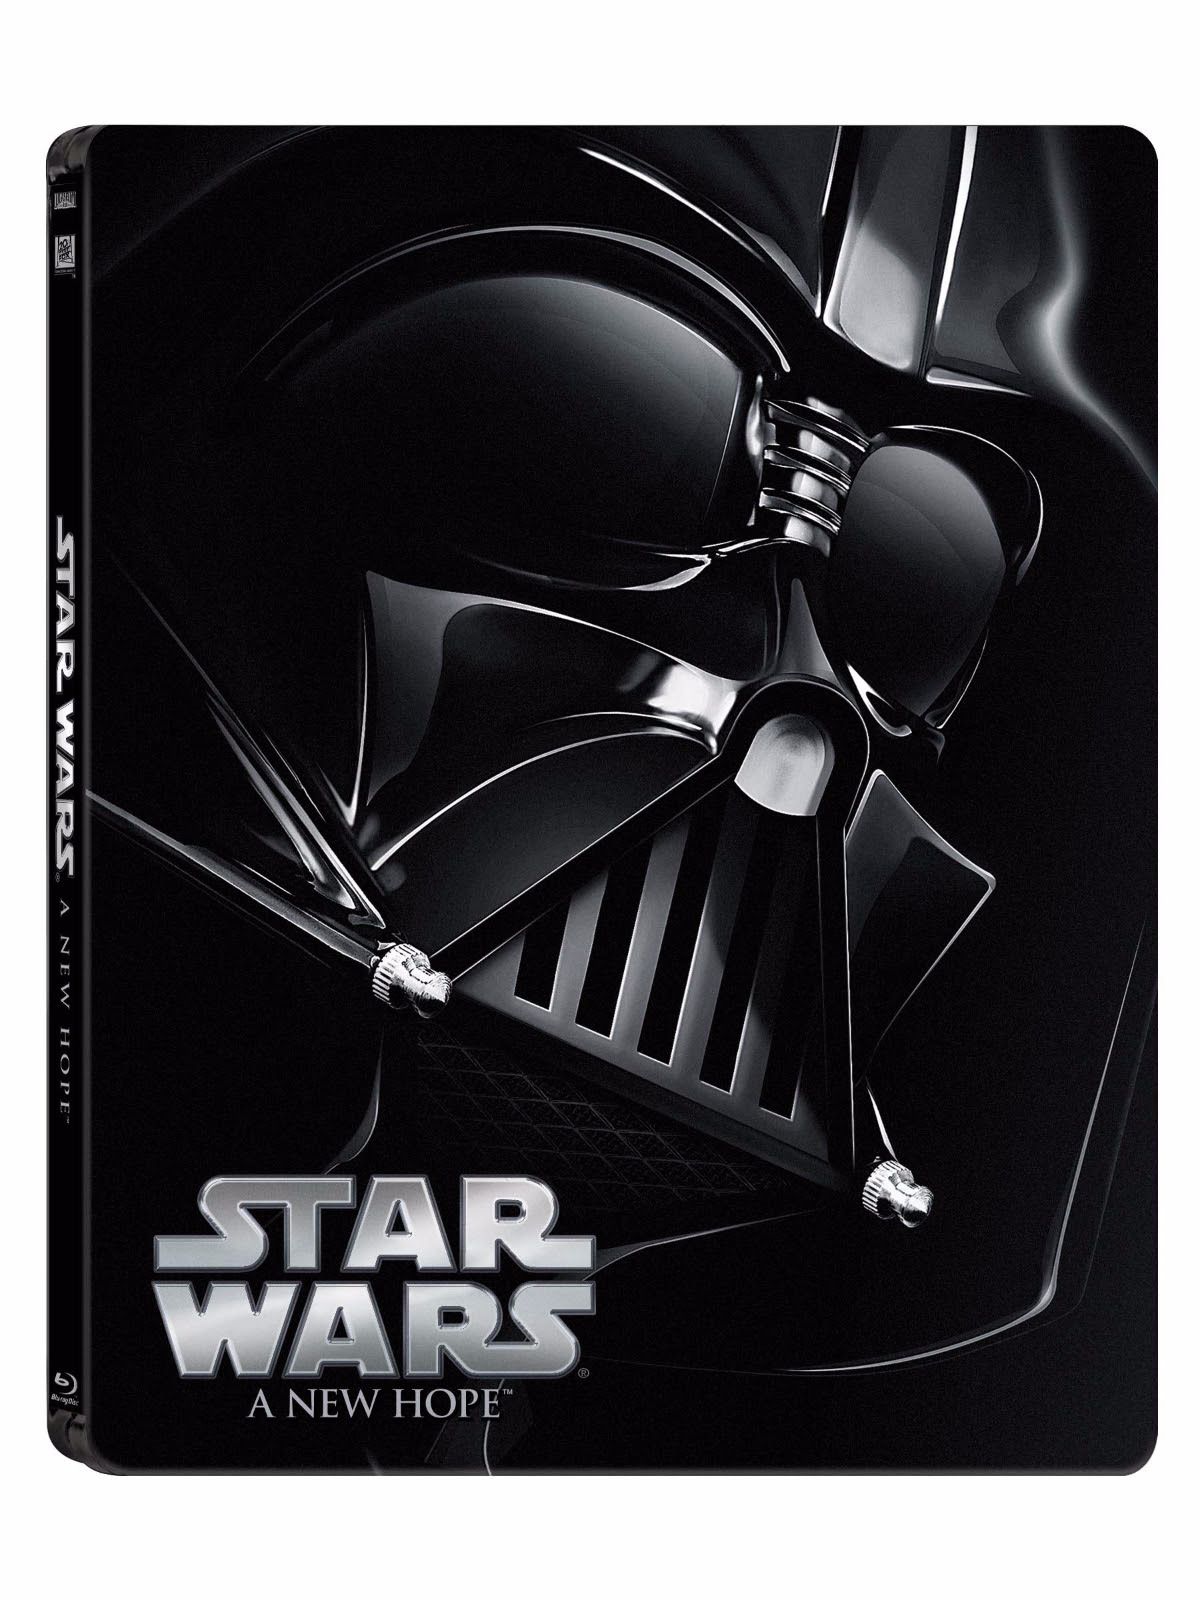 Star Wars Blu-ray Steelbooks Cover